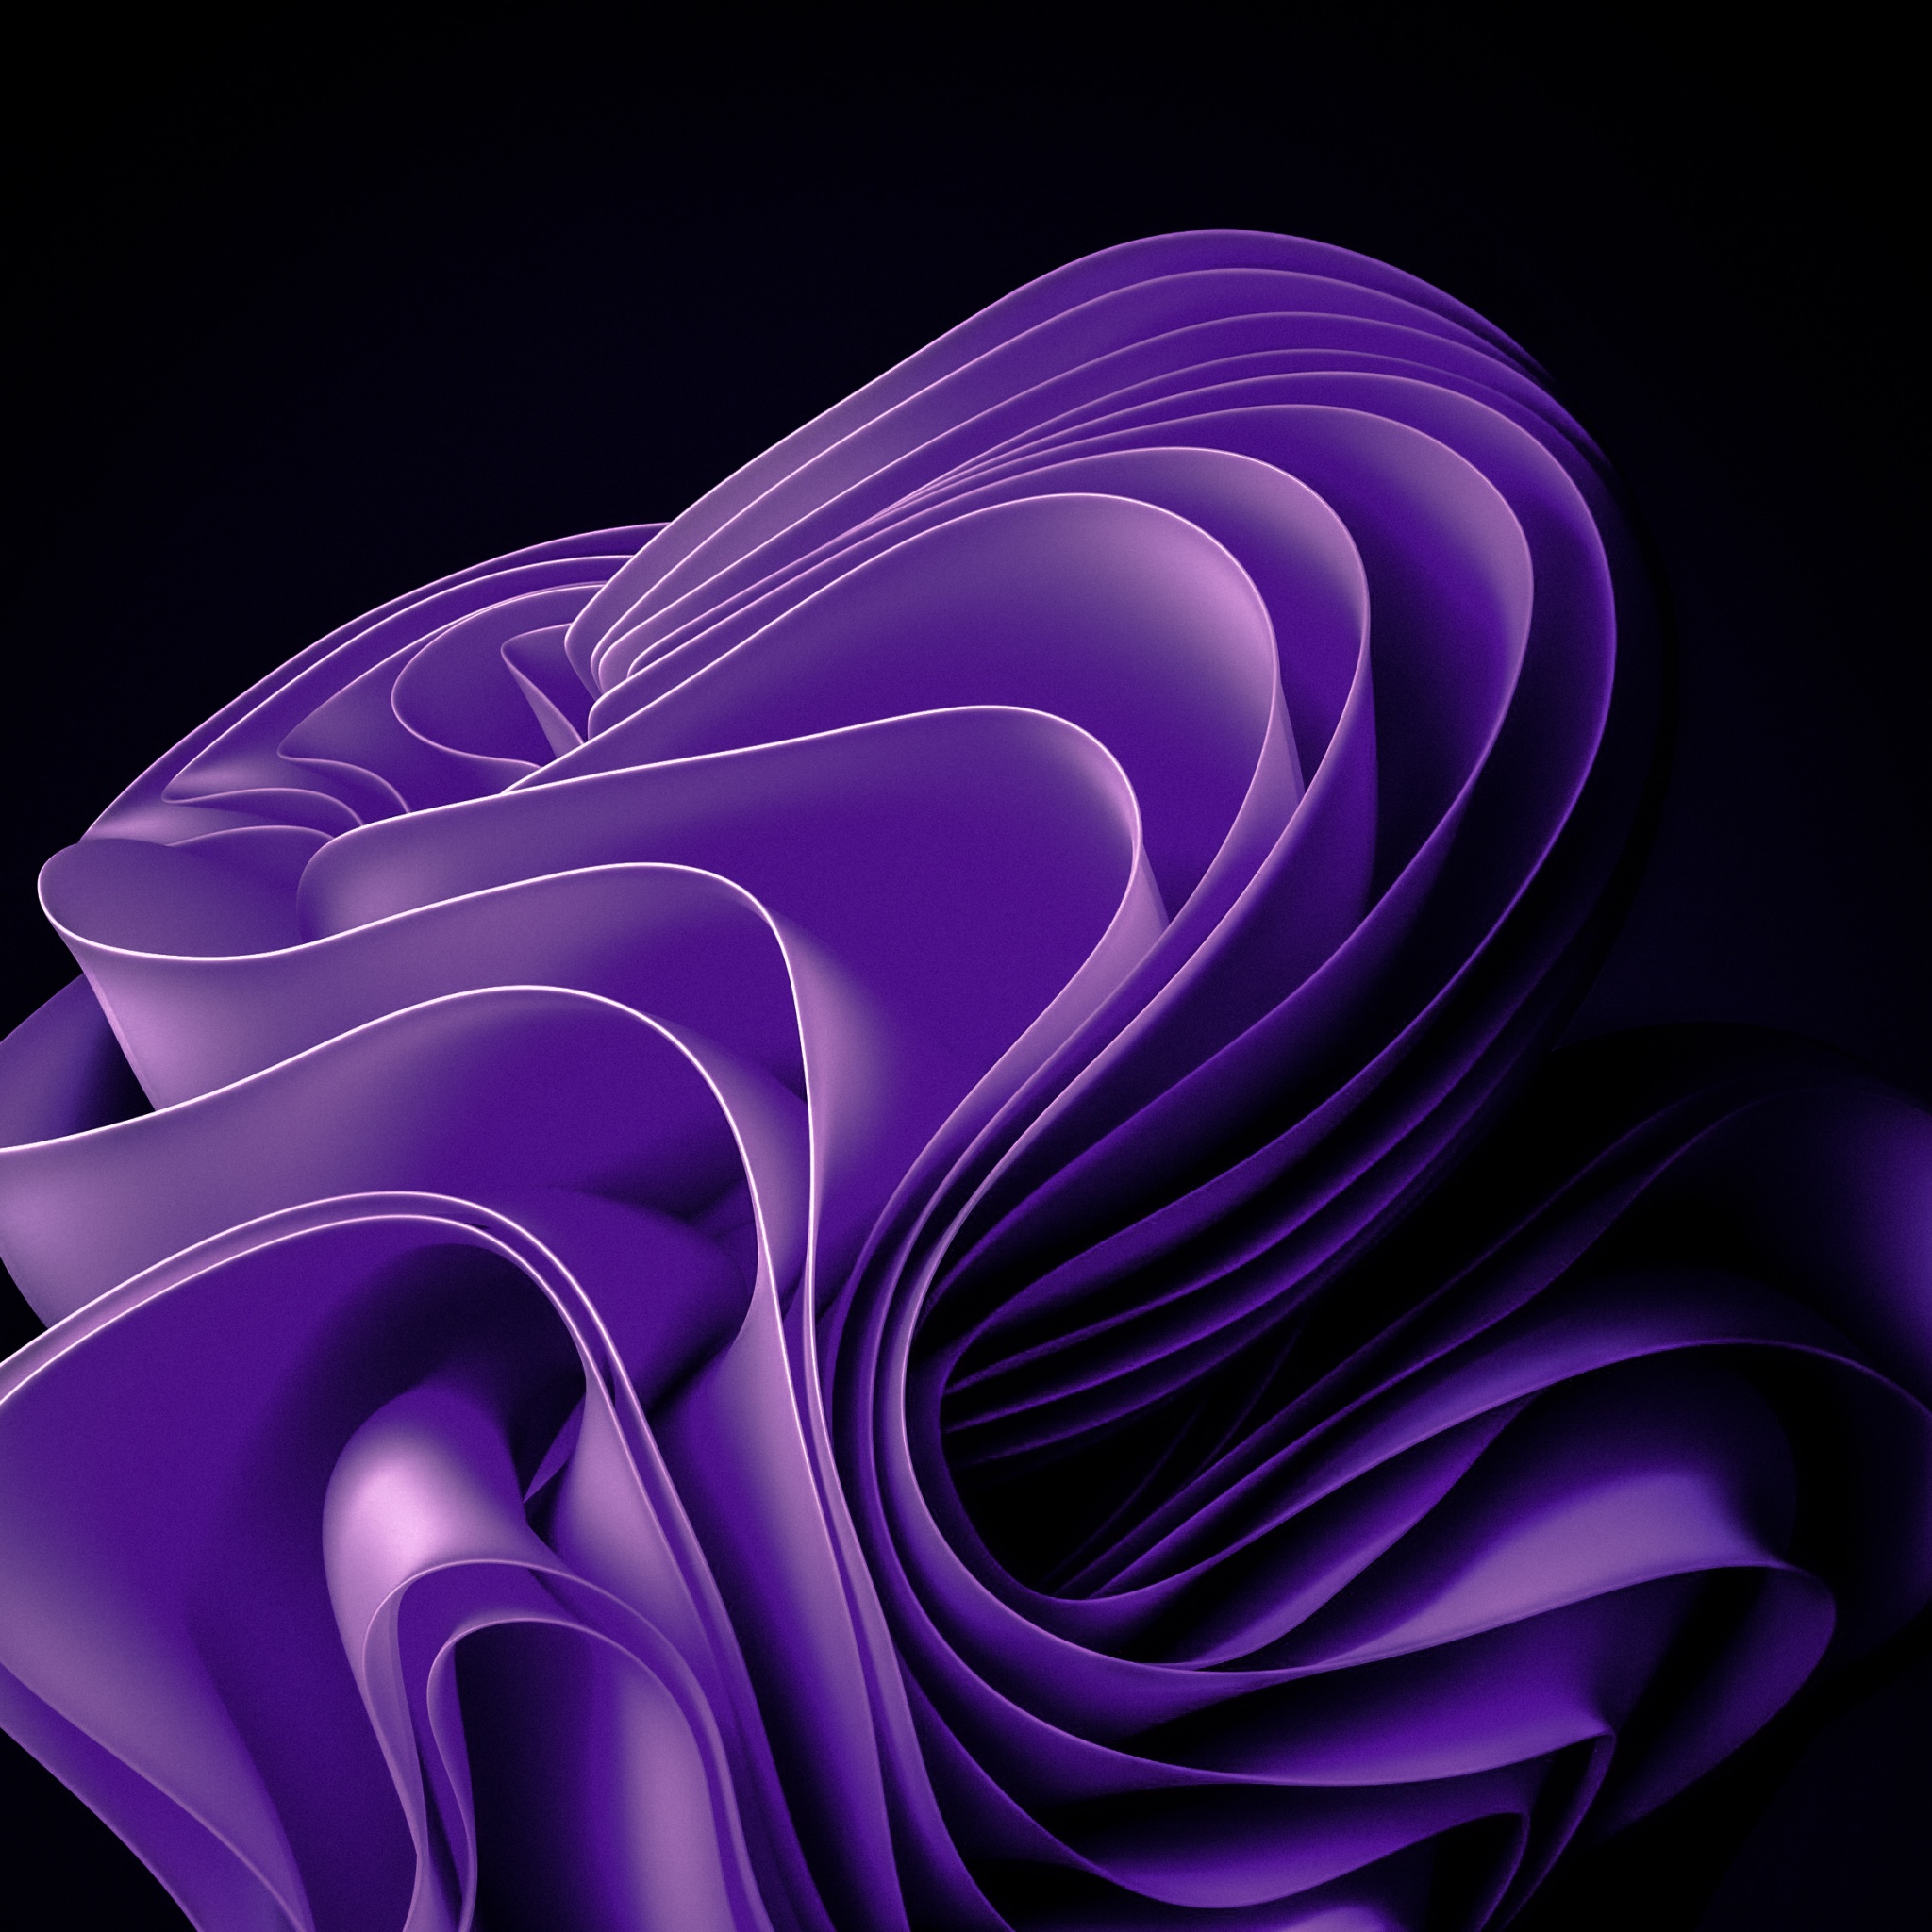 Wallpaper ID 5380  lines waves abstraction dark purple 4k free  download